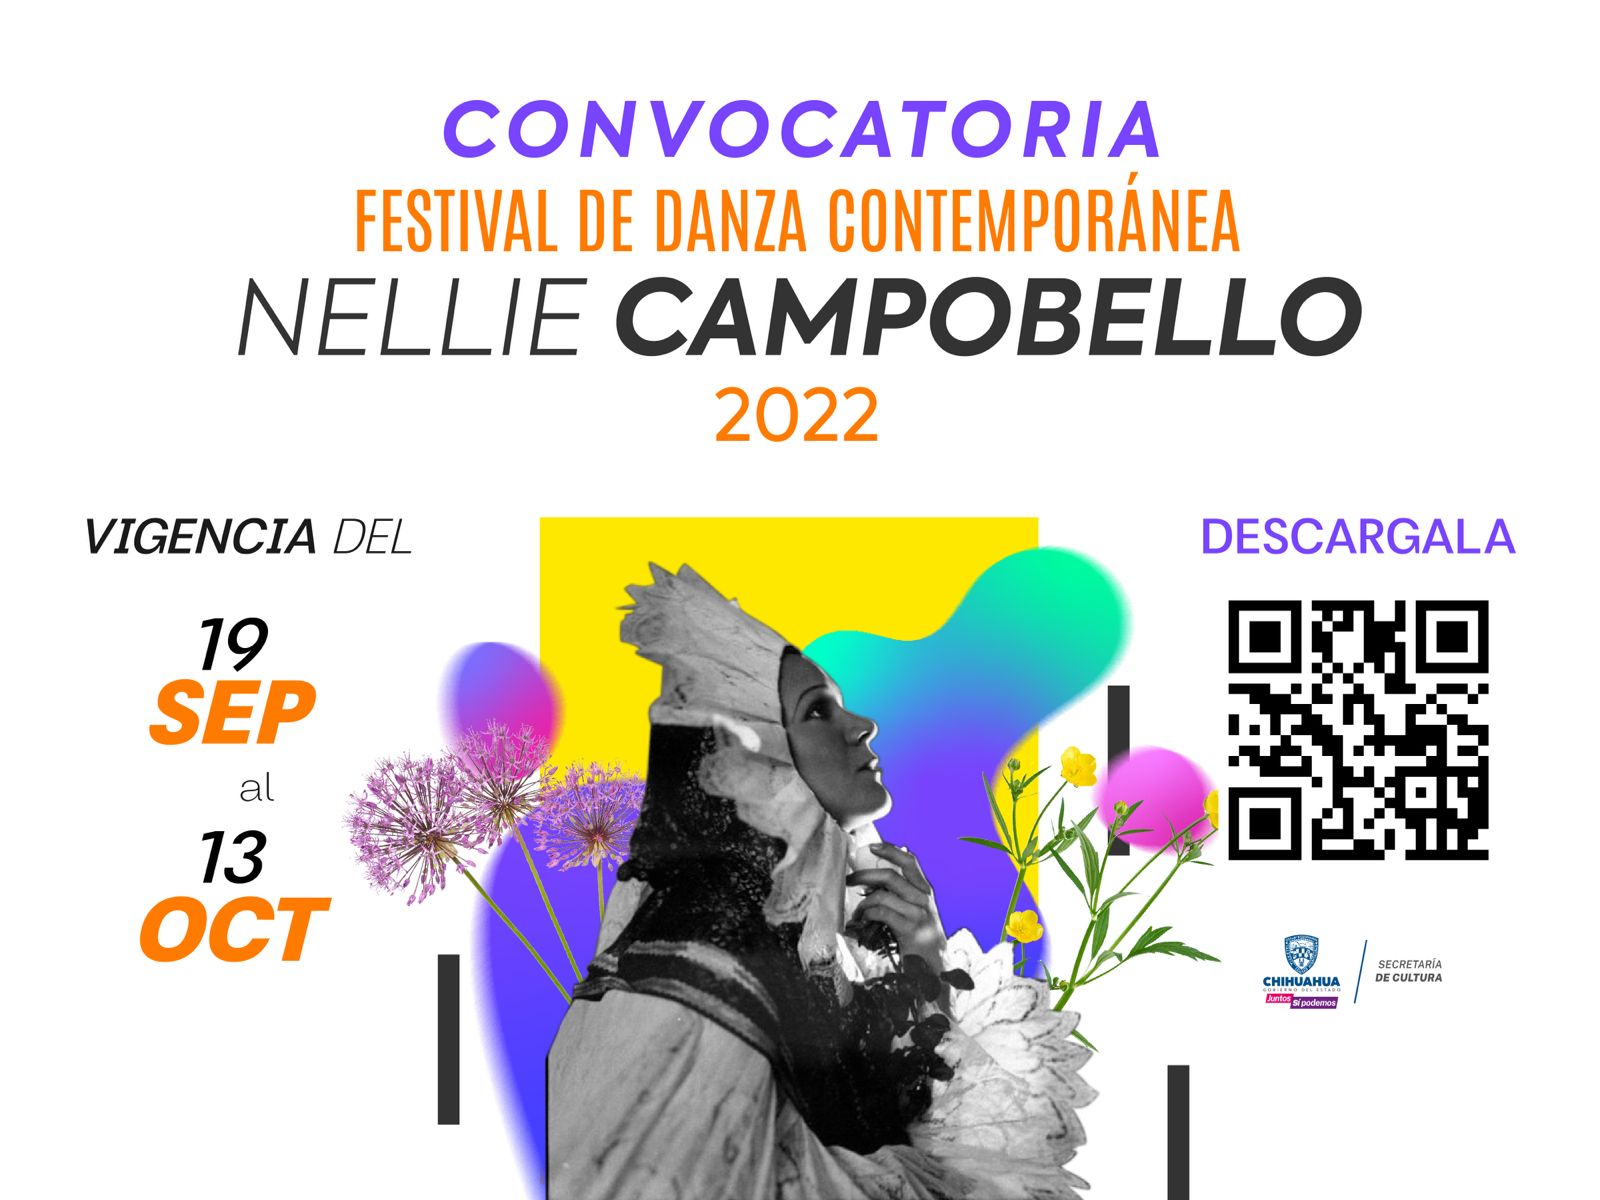 Invitan a compañías de danza a participar en la convocatoria Nellie Campobello 2022